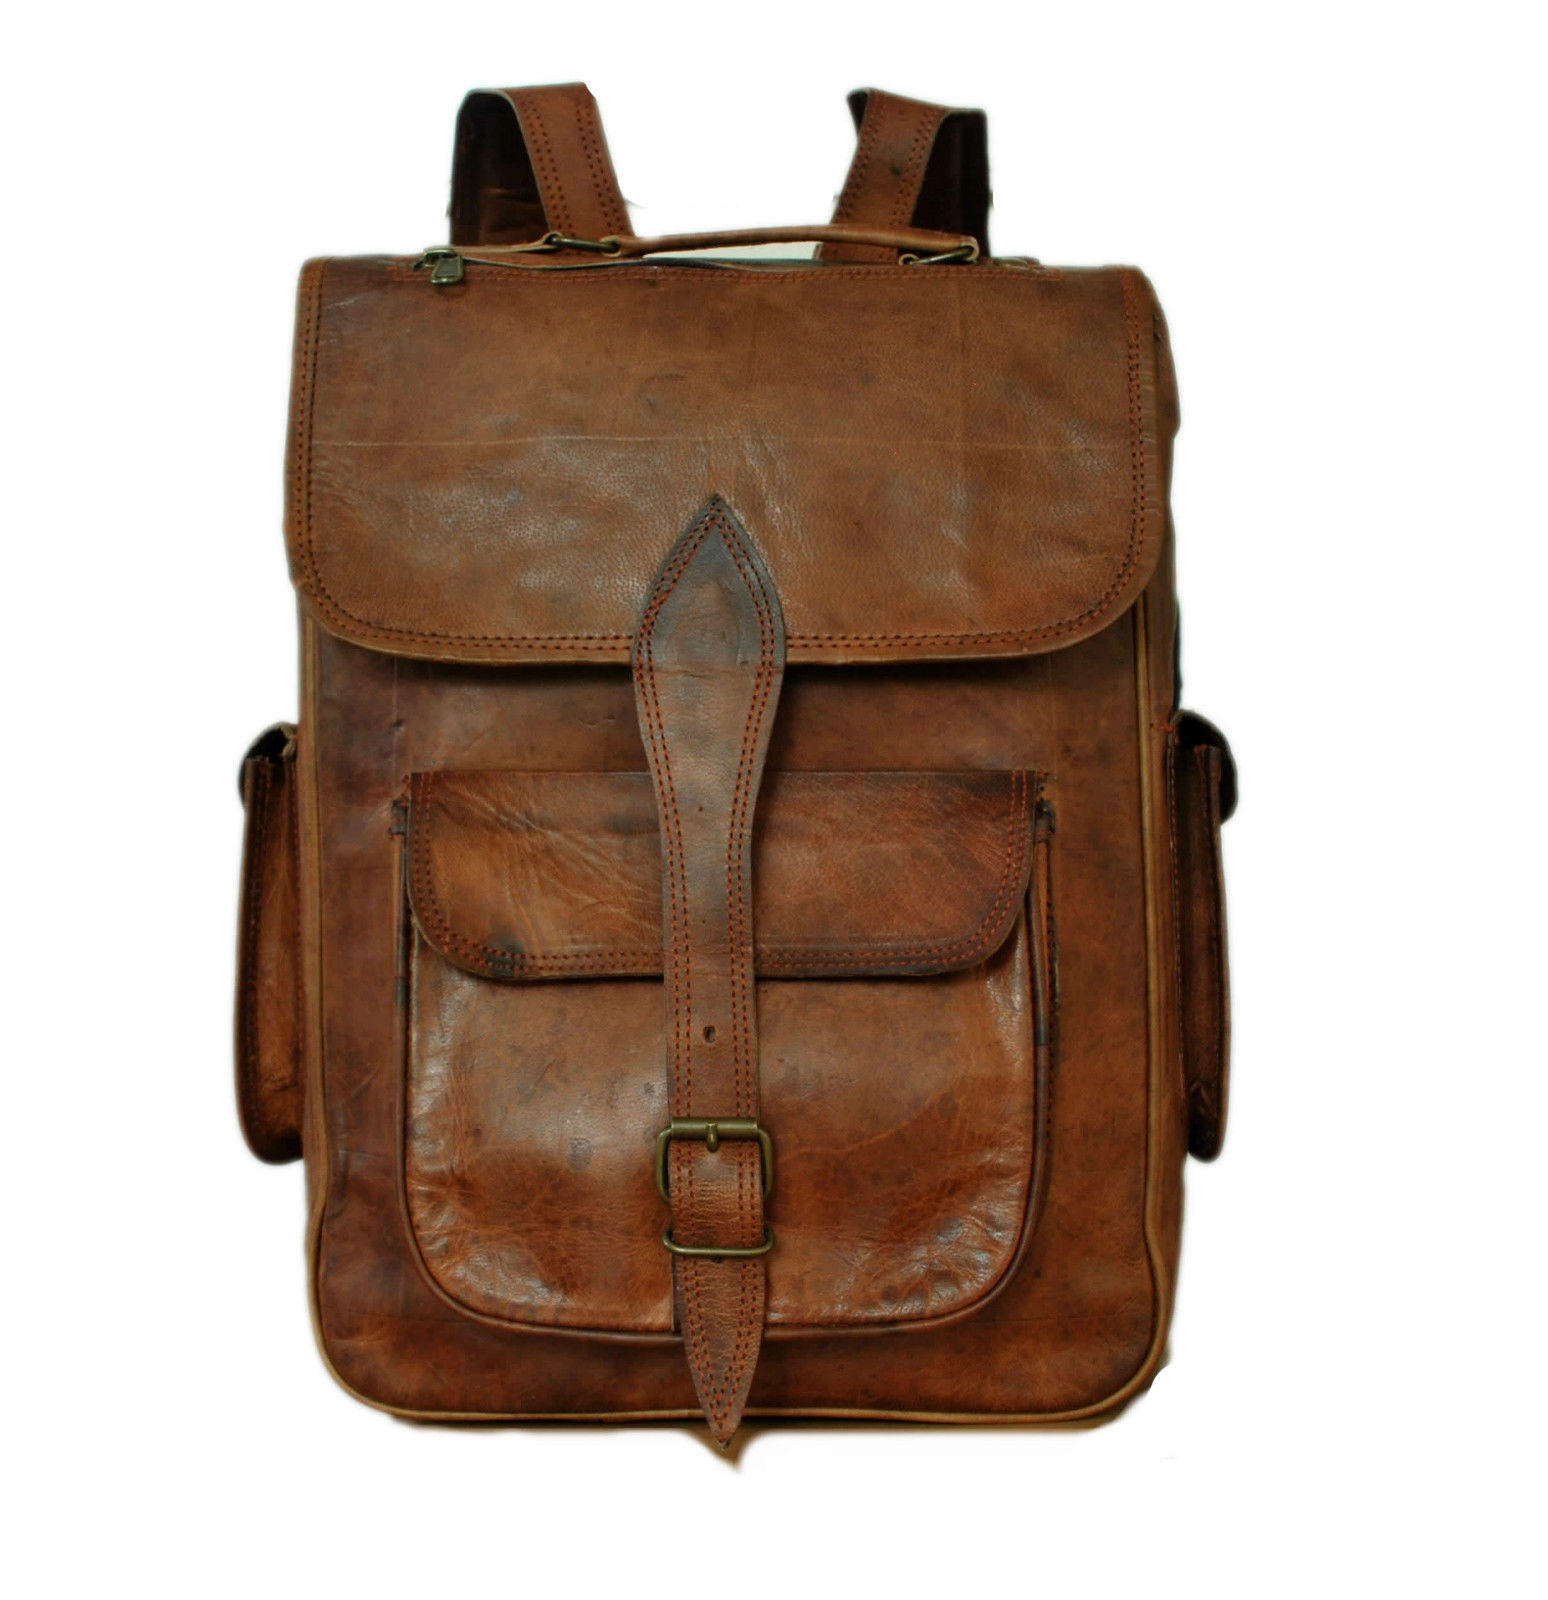 Backpack/Rucksack patterns - Resources - Leatherworker.net